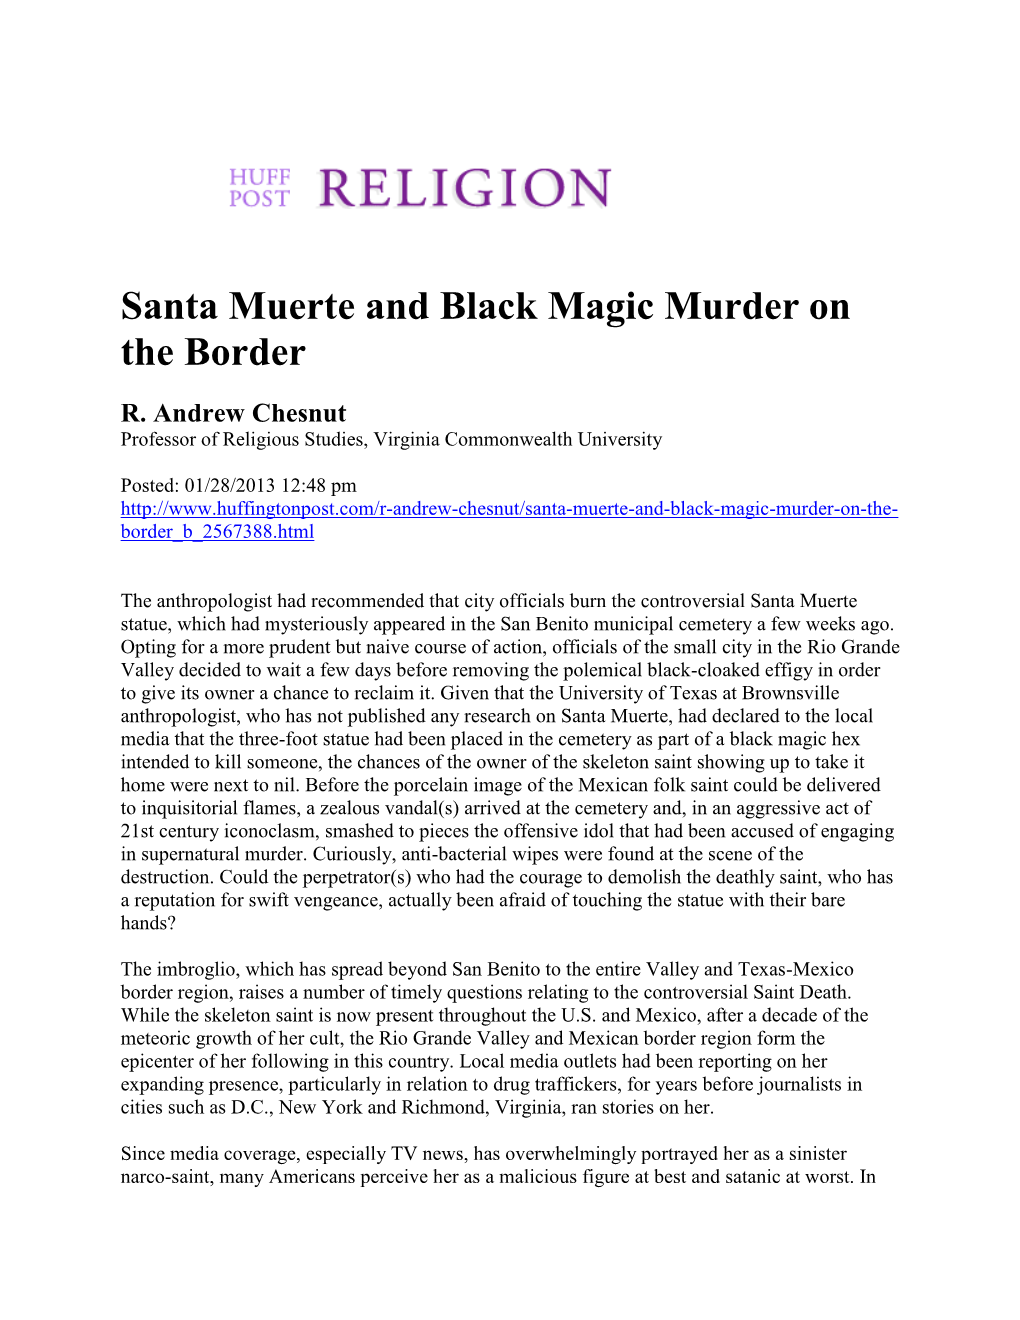 Santa Muerte and Black Magic Murder on the Border